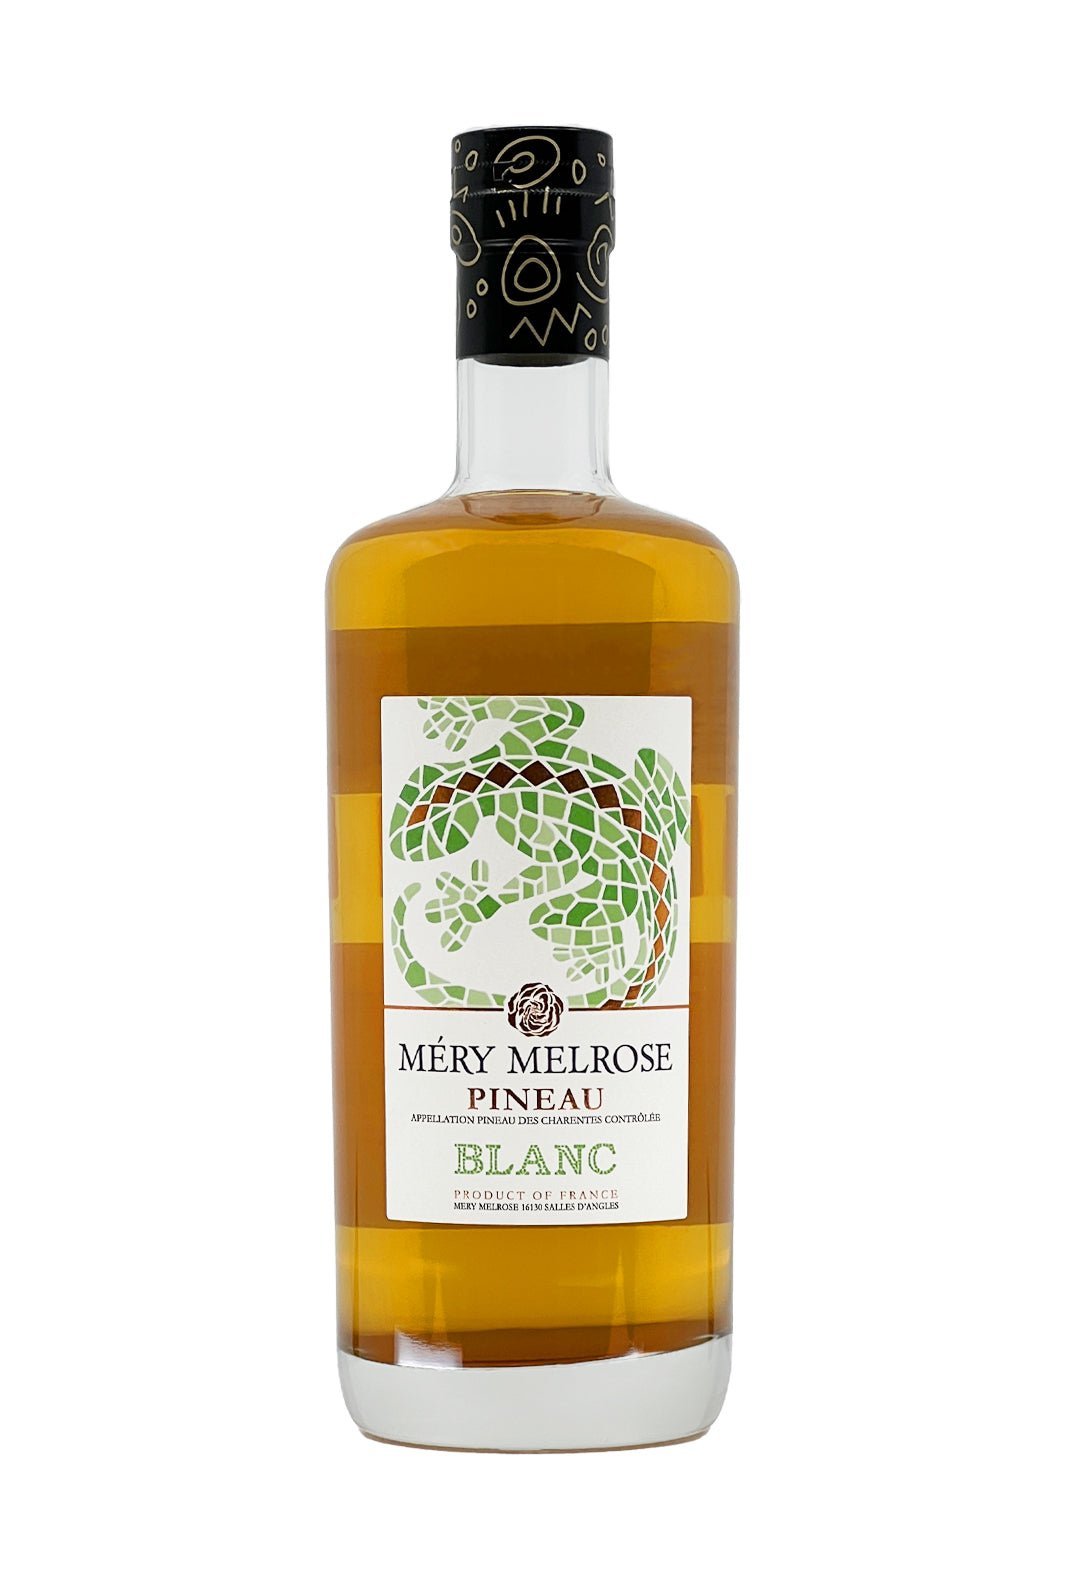 Mery Melrose Pineau des Charentes Blanc (White) Organic 17.5% 750ml | Liquor & Spirits | Shop online at Spirits of France